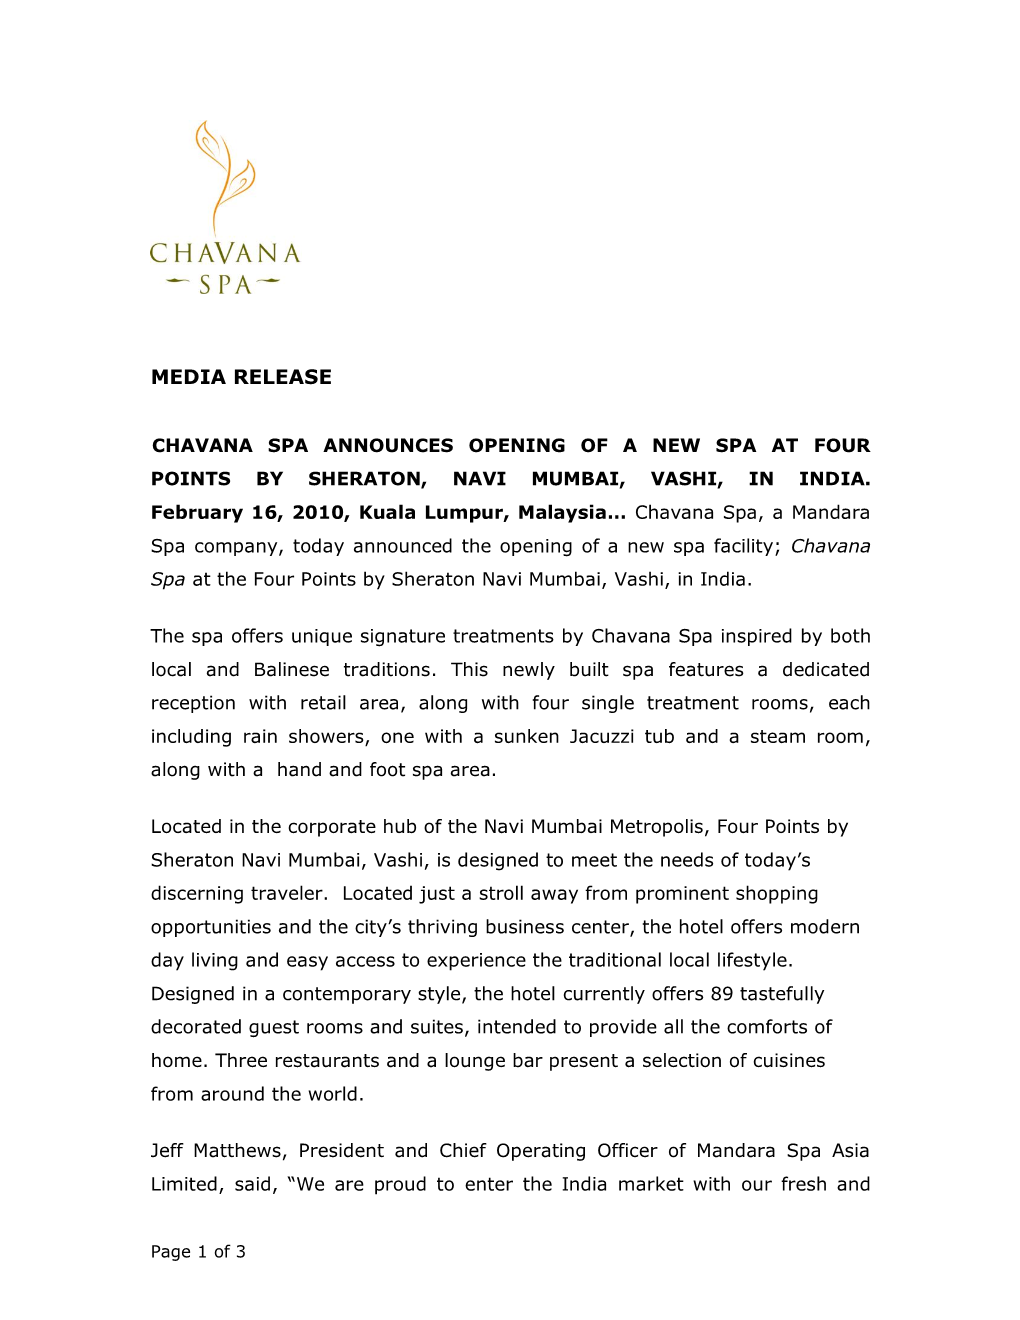 Chavana Spa Announces Opening of a New Spa at Four Points by Sheraton, Navi Mumbai, Vashi, in India